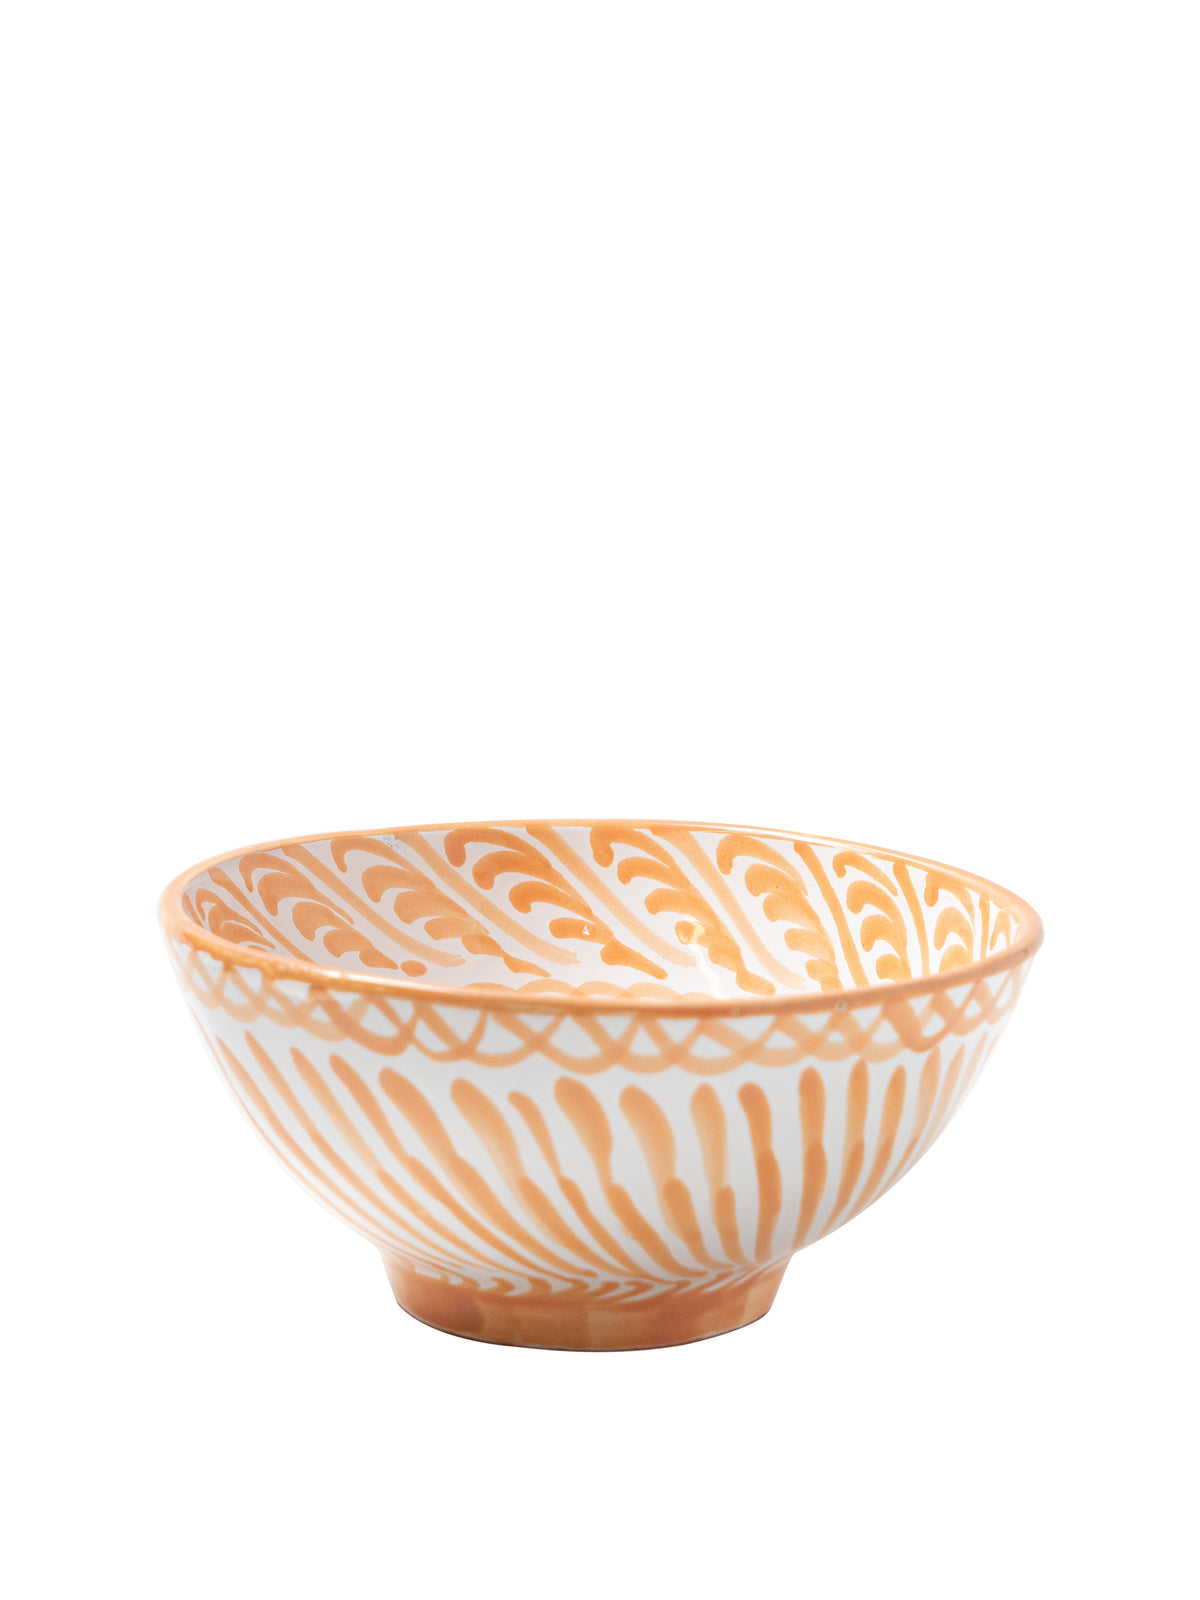 Casa Melocoton Medium Bowl with Hand-painted Designs